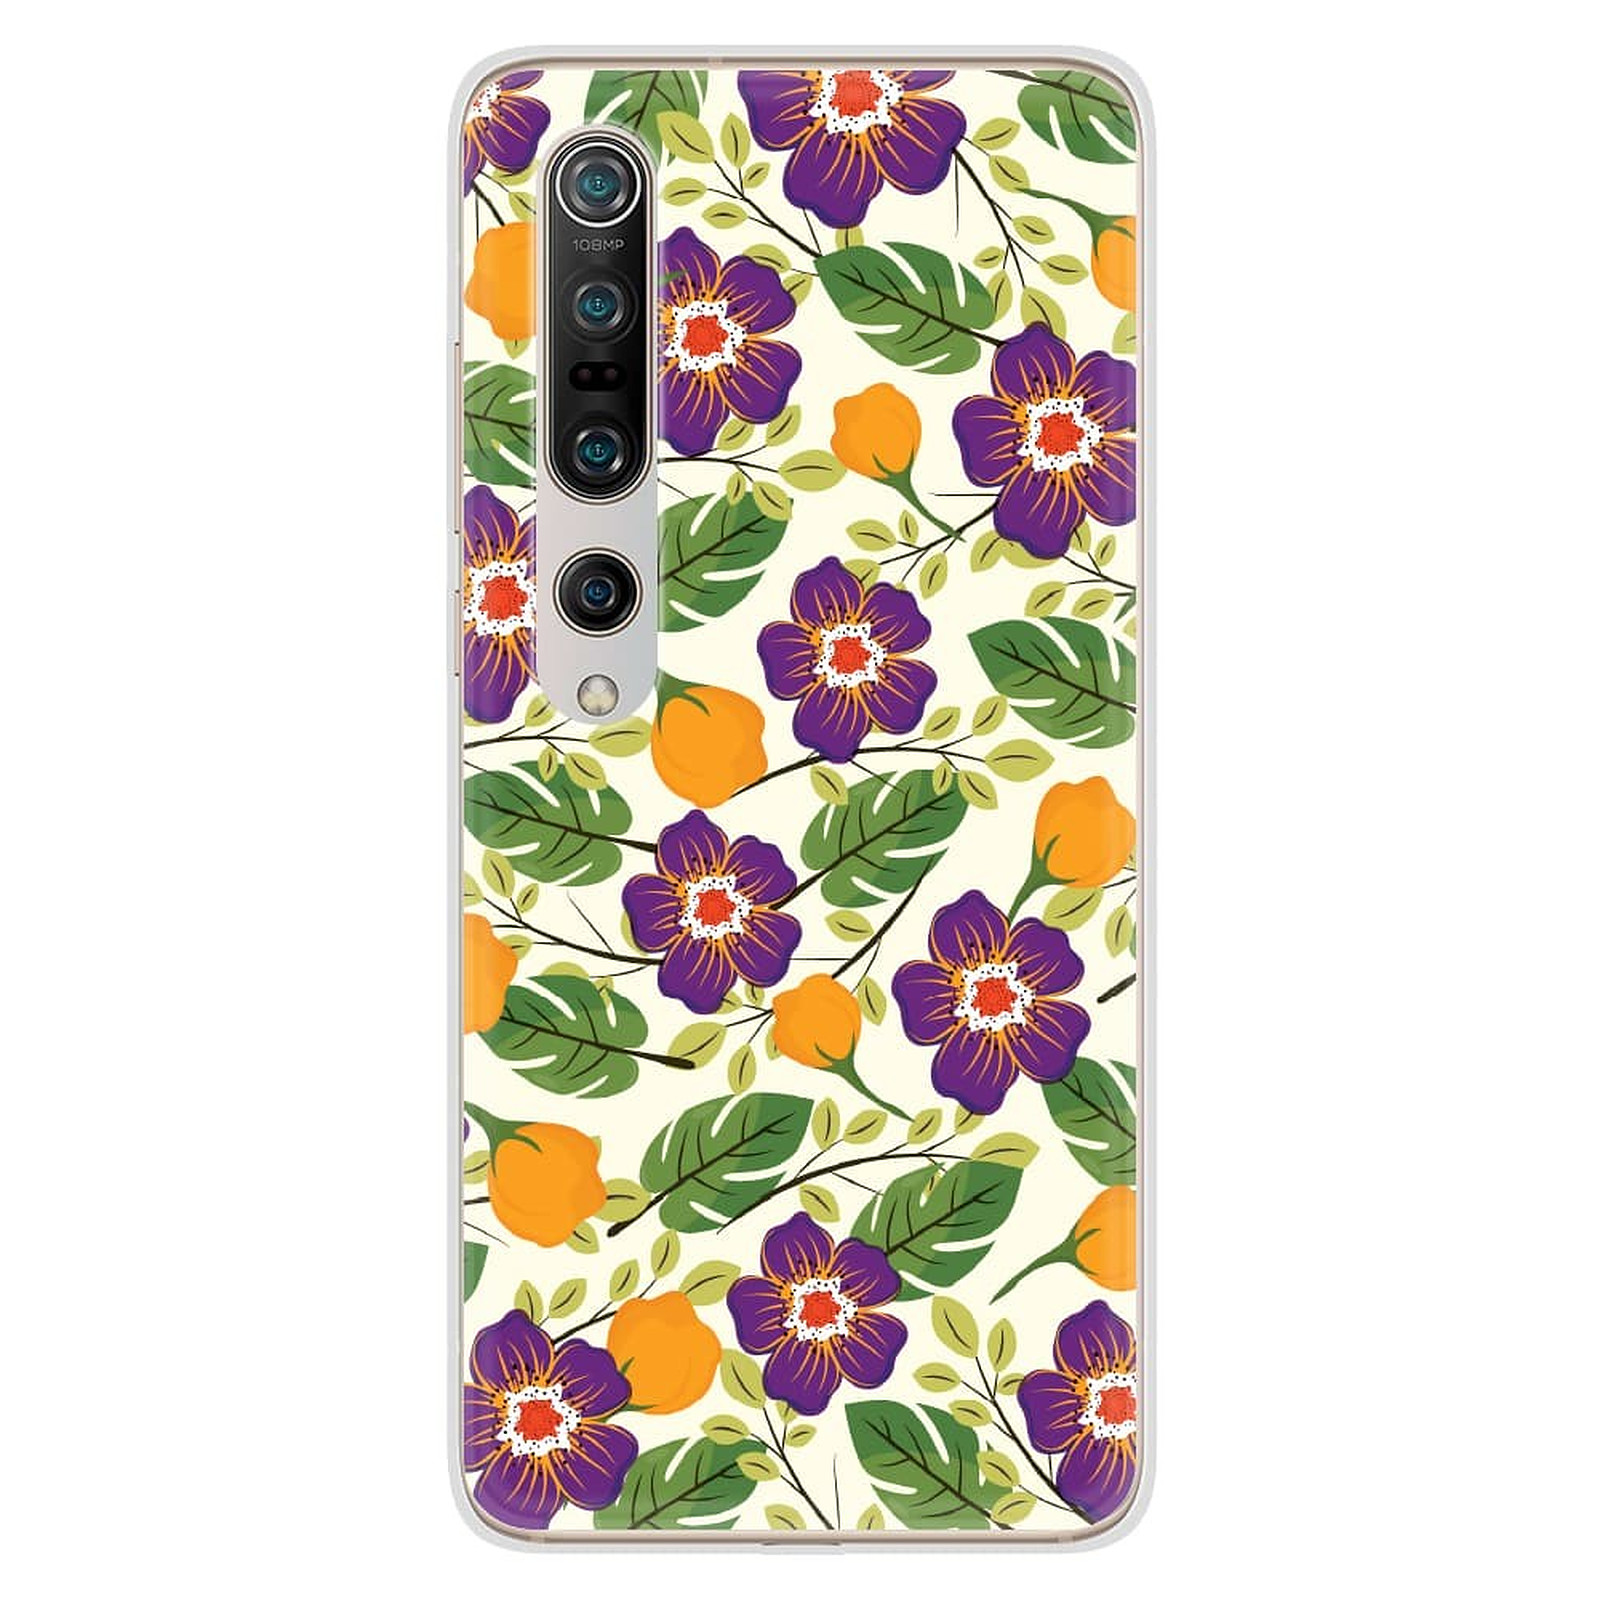 1001 Coques Coque silicone gel Xiaomi Mi 10 / Mi 10 pro motif Fleurs Violettes - Coque telephone 1001Coques